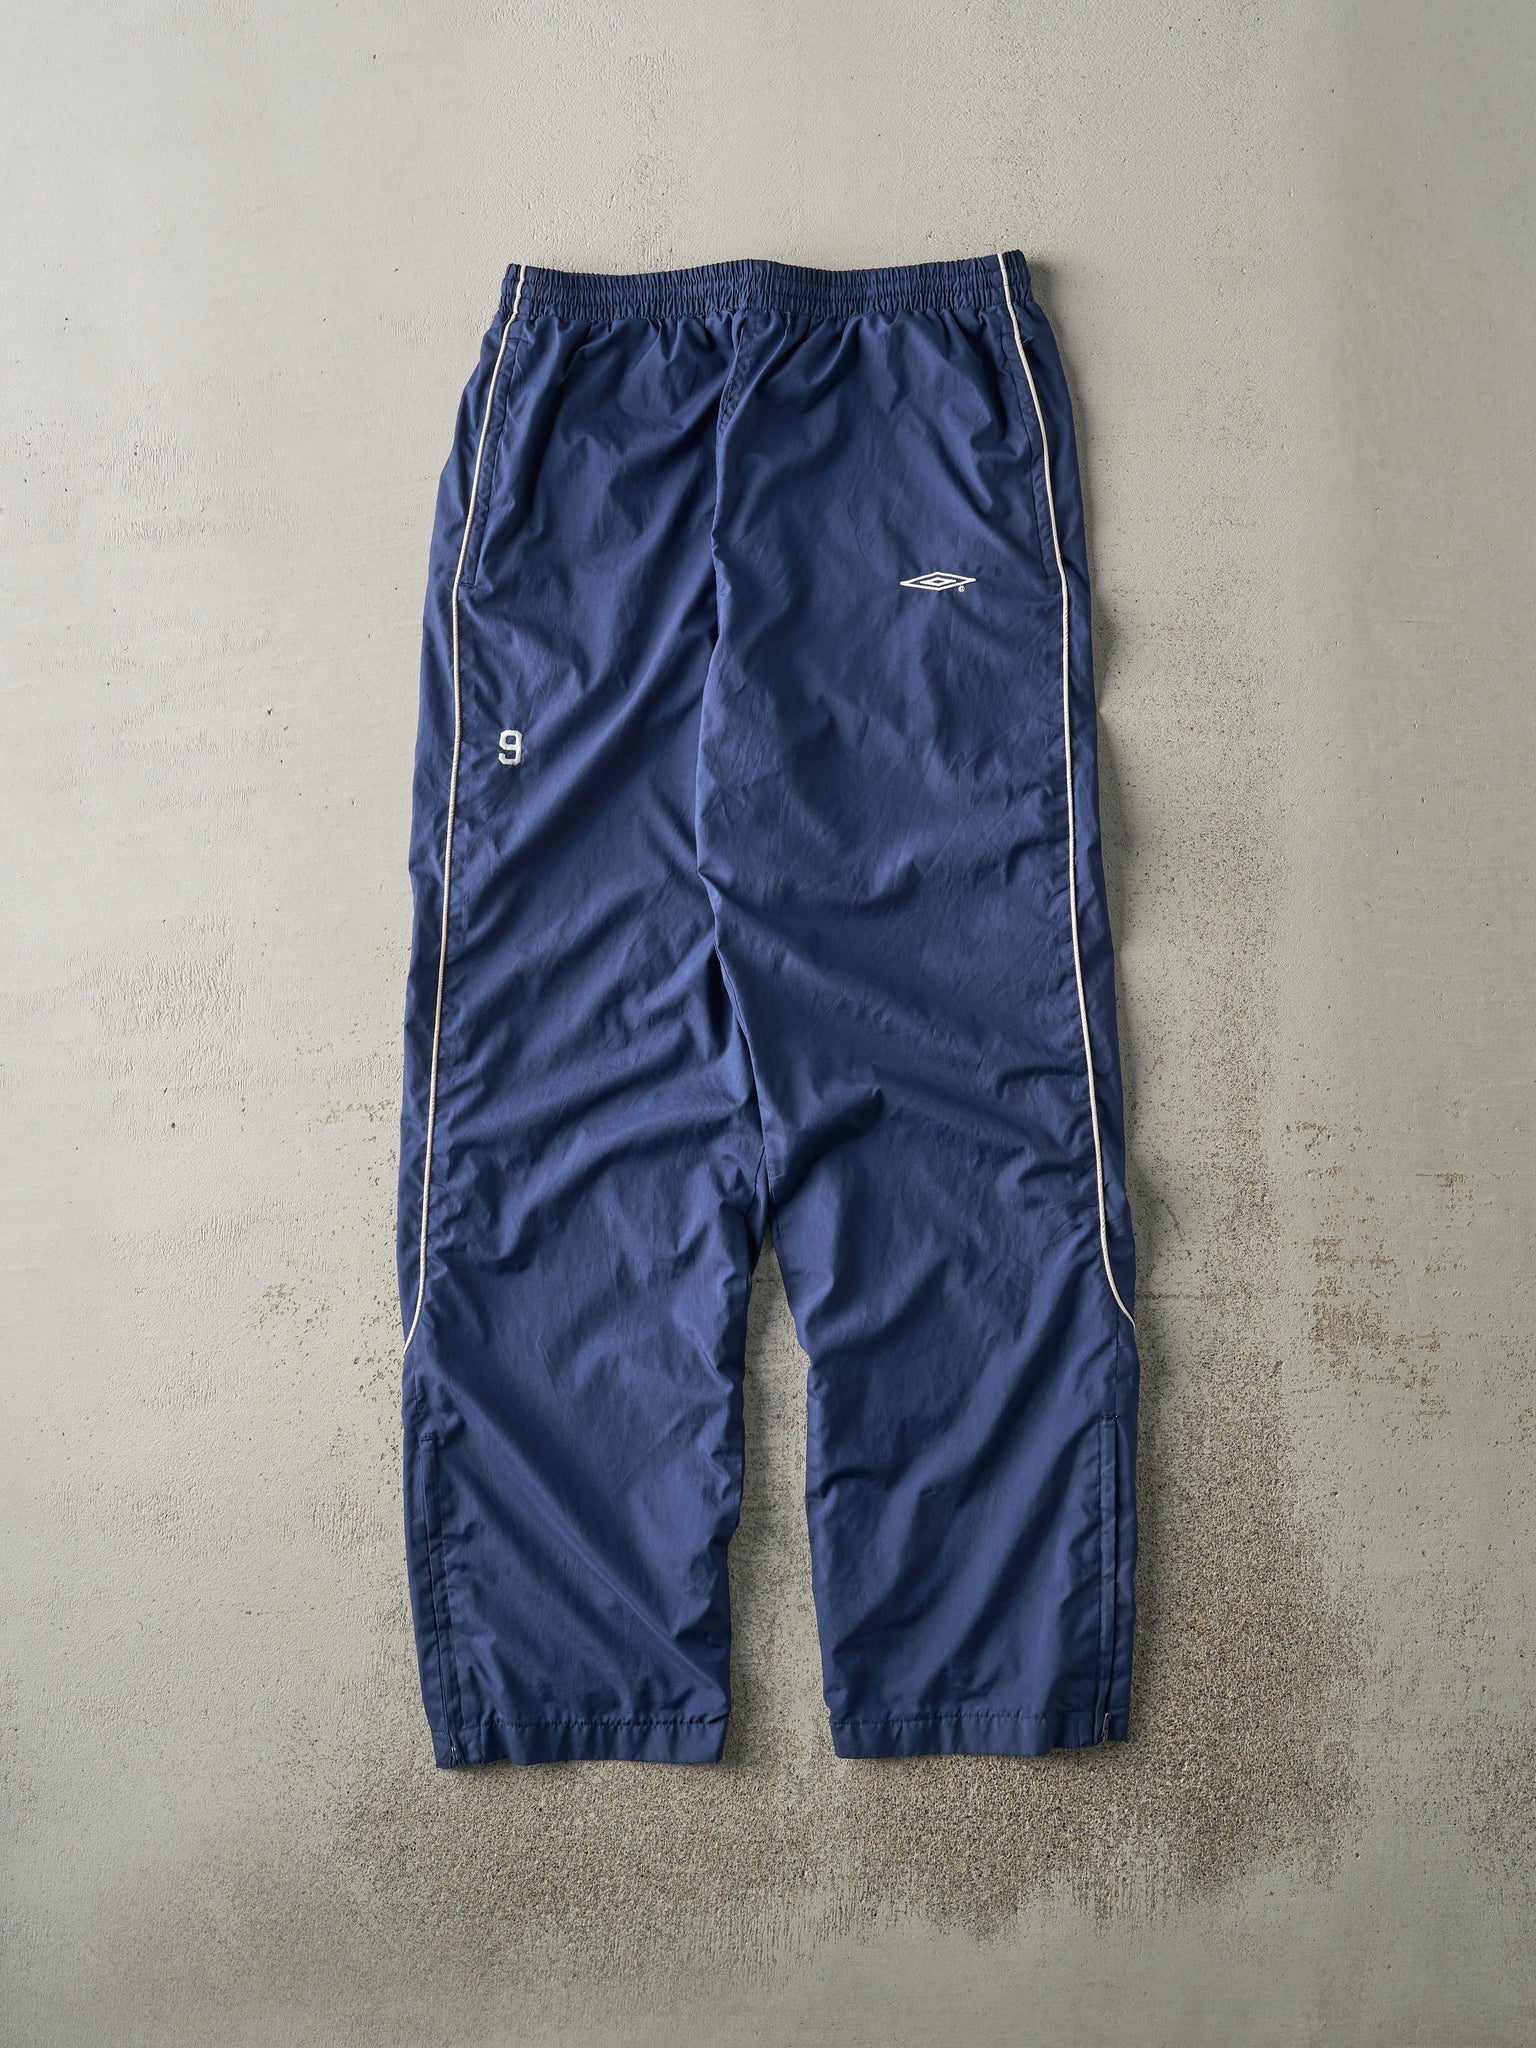 Vintage 90s Navy Blue Umbro Windbreaker Pants (32x31)